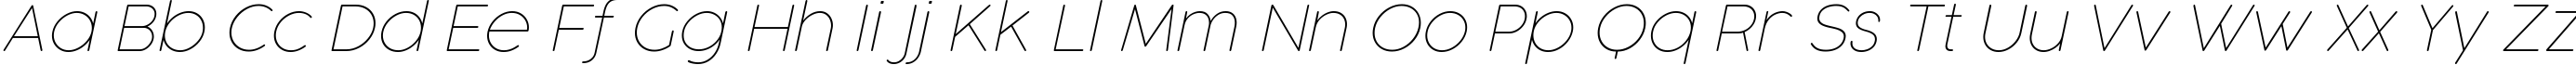 Пример написания английского алфавита шрифтом Cocogoose Pro Thin Italic